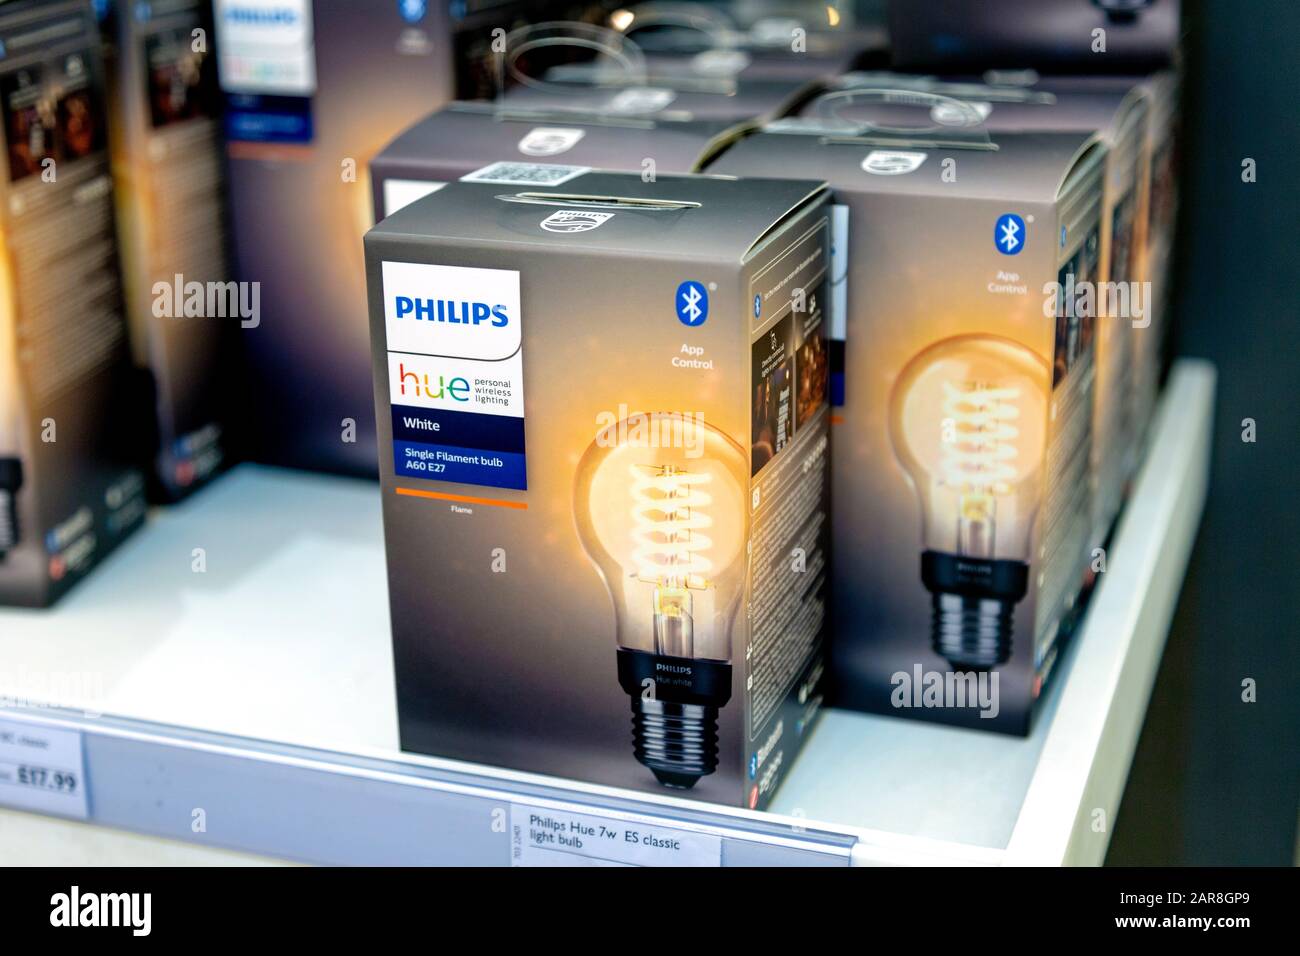 Philips Hue smart lightbulbs on a shelf in a store Stock Photo